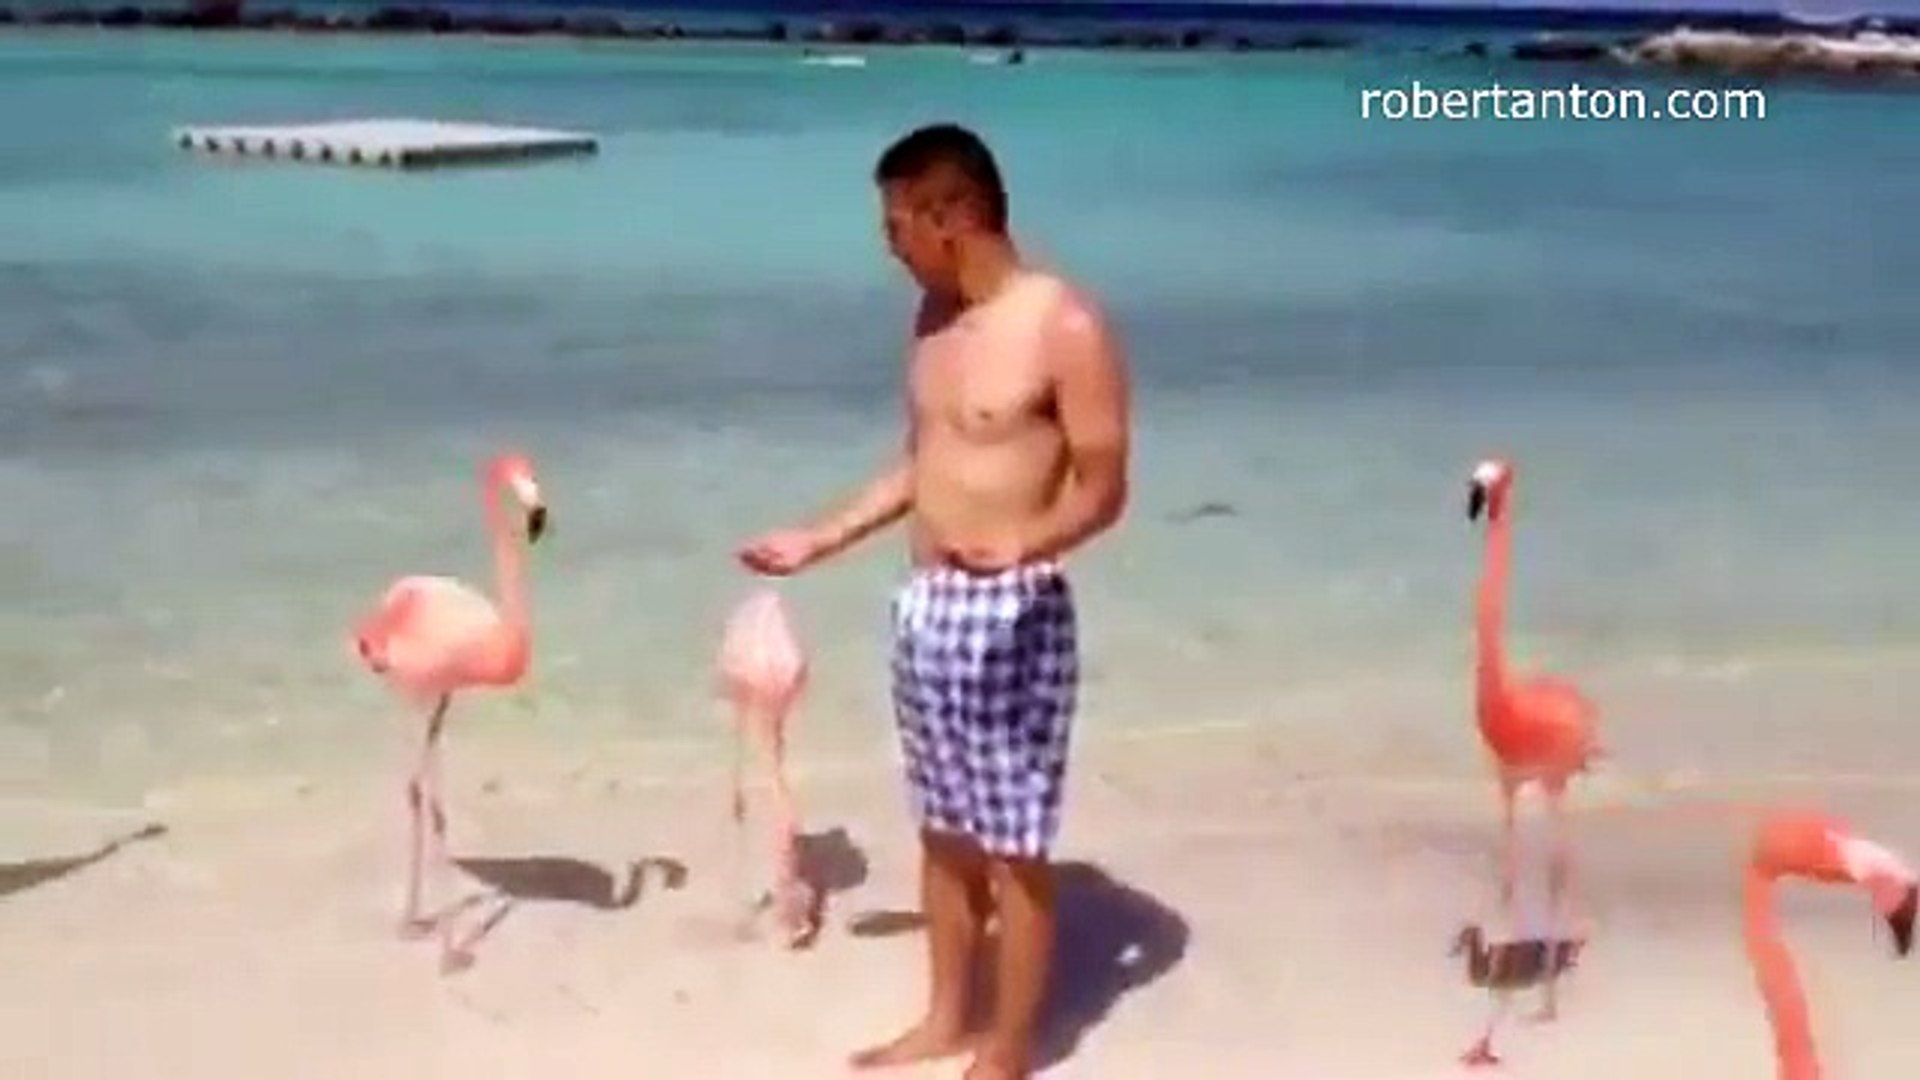 When Flamingo feeding goes Wrong